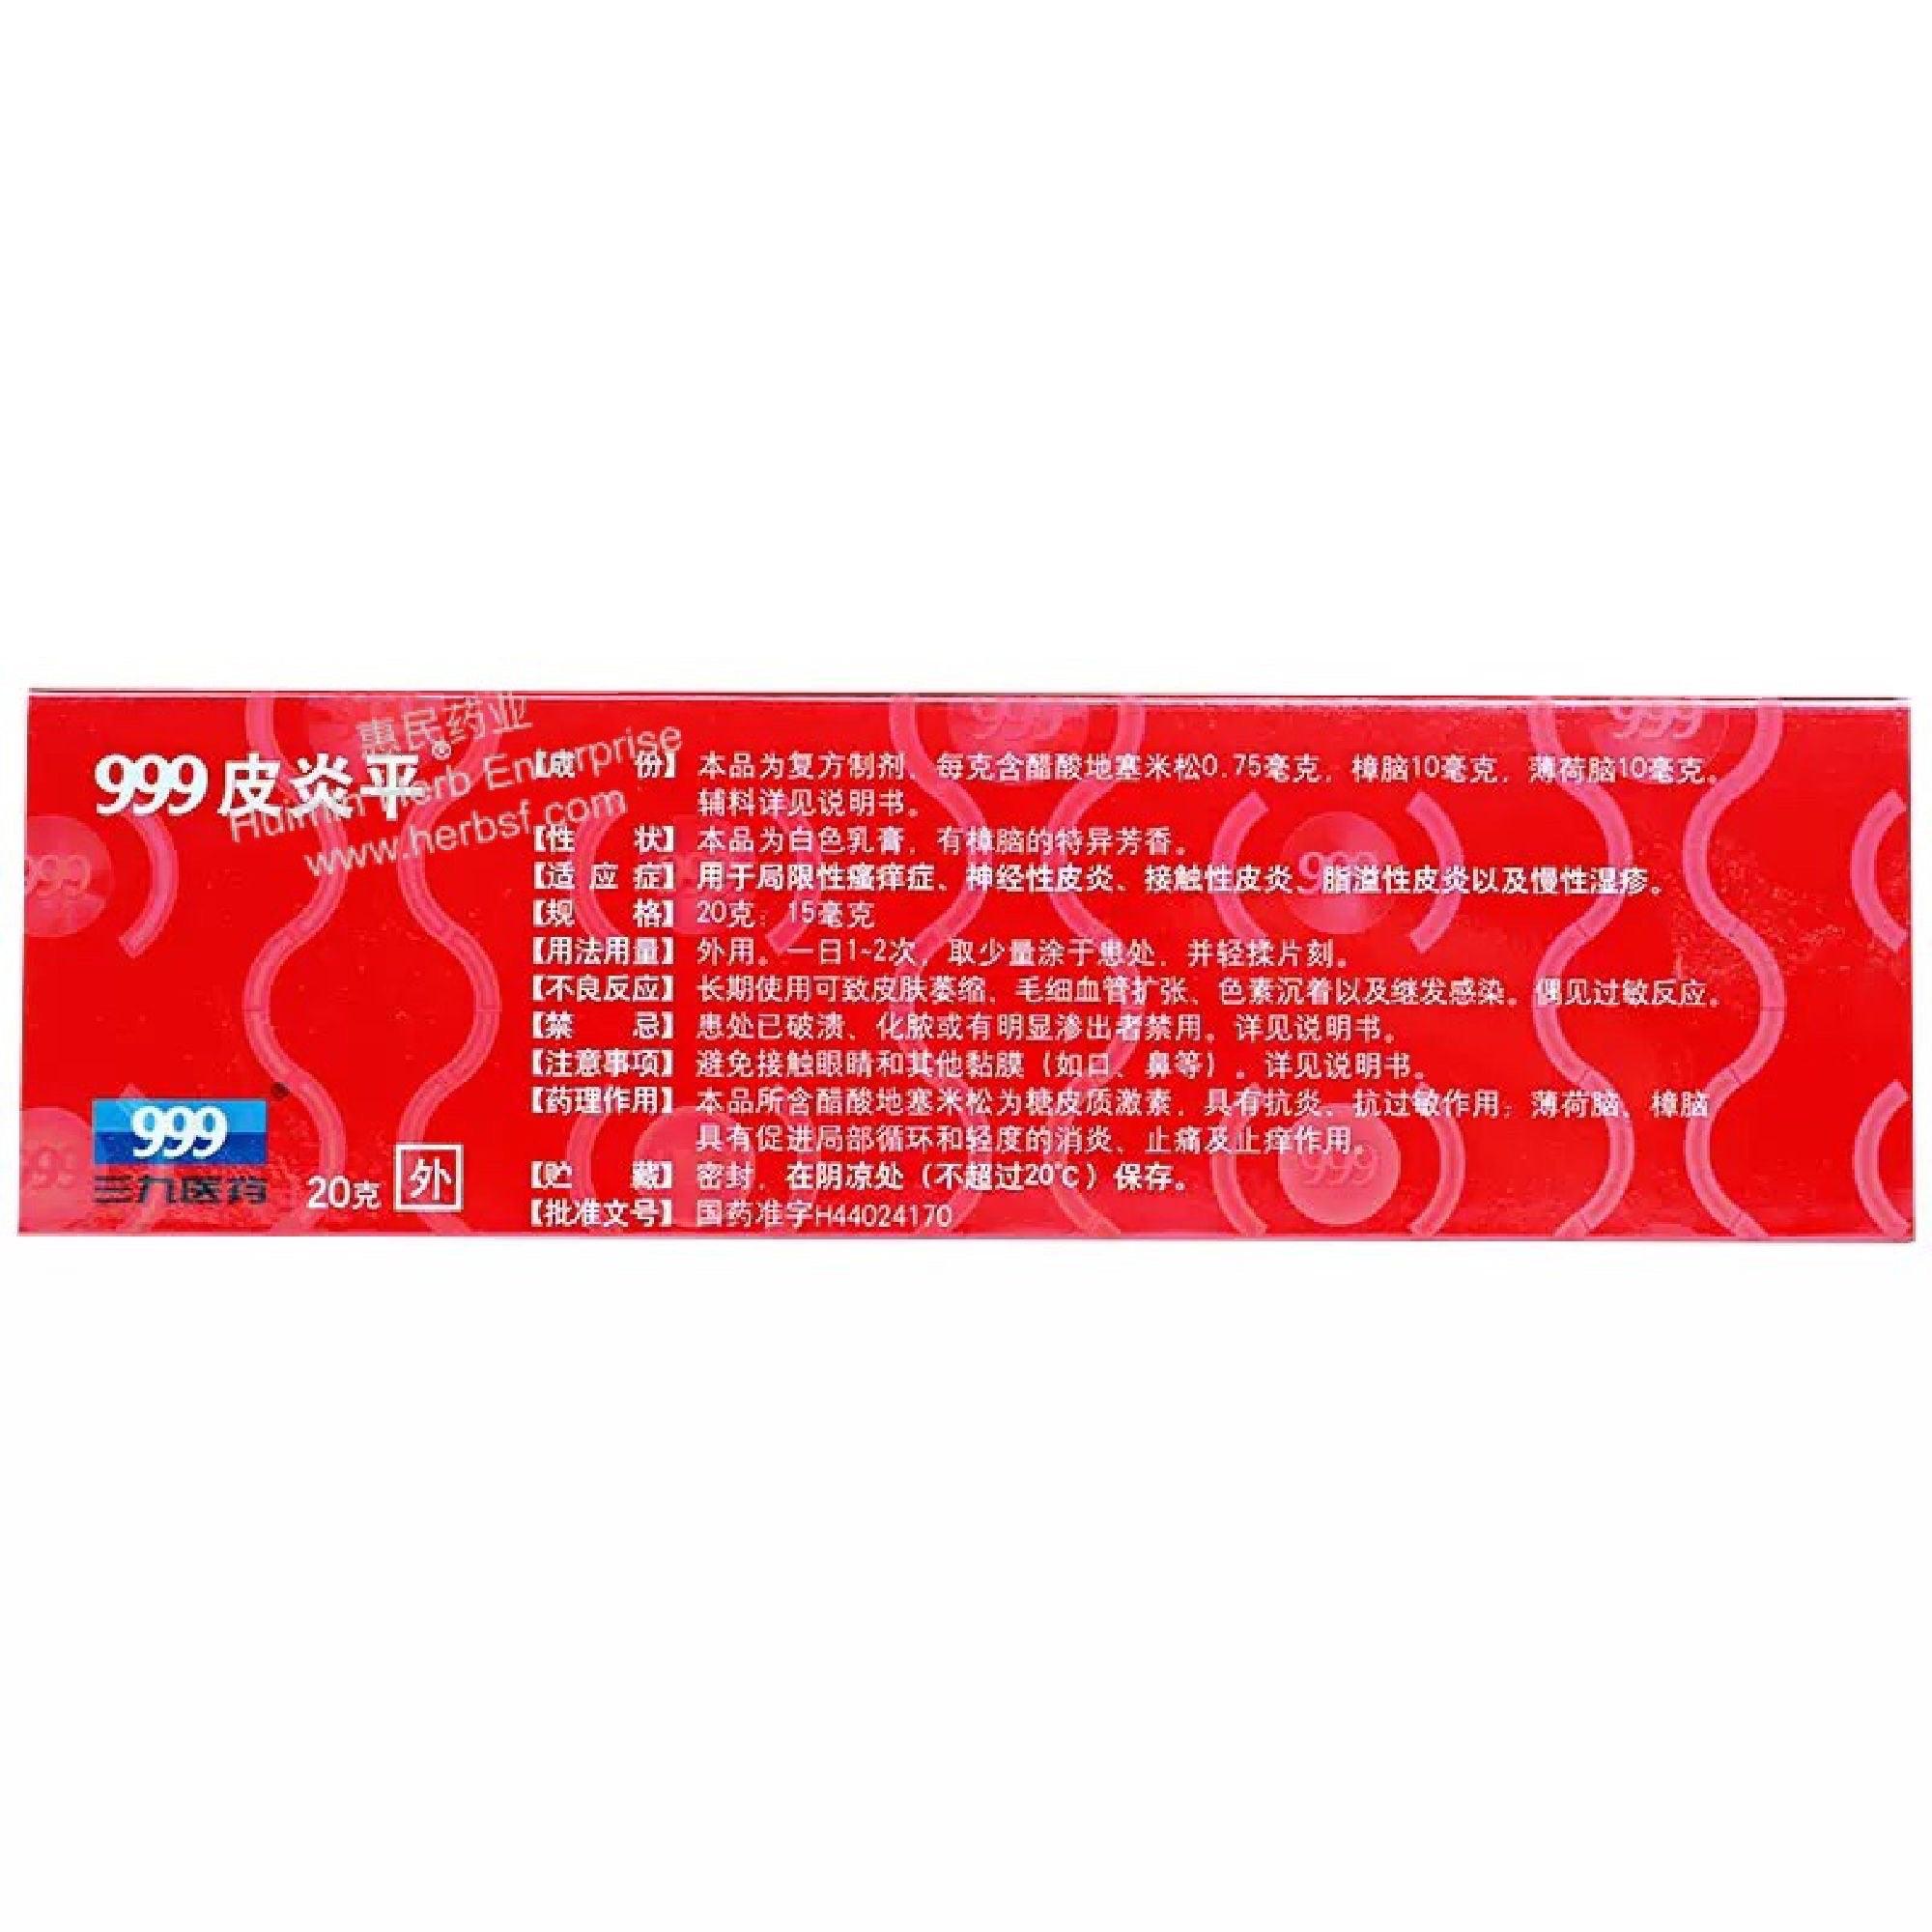 999 San Jiu Pi Yan Ping Itch Relief Ointment 20g